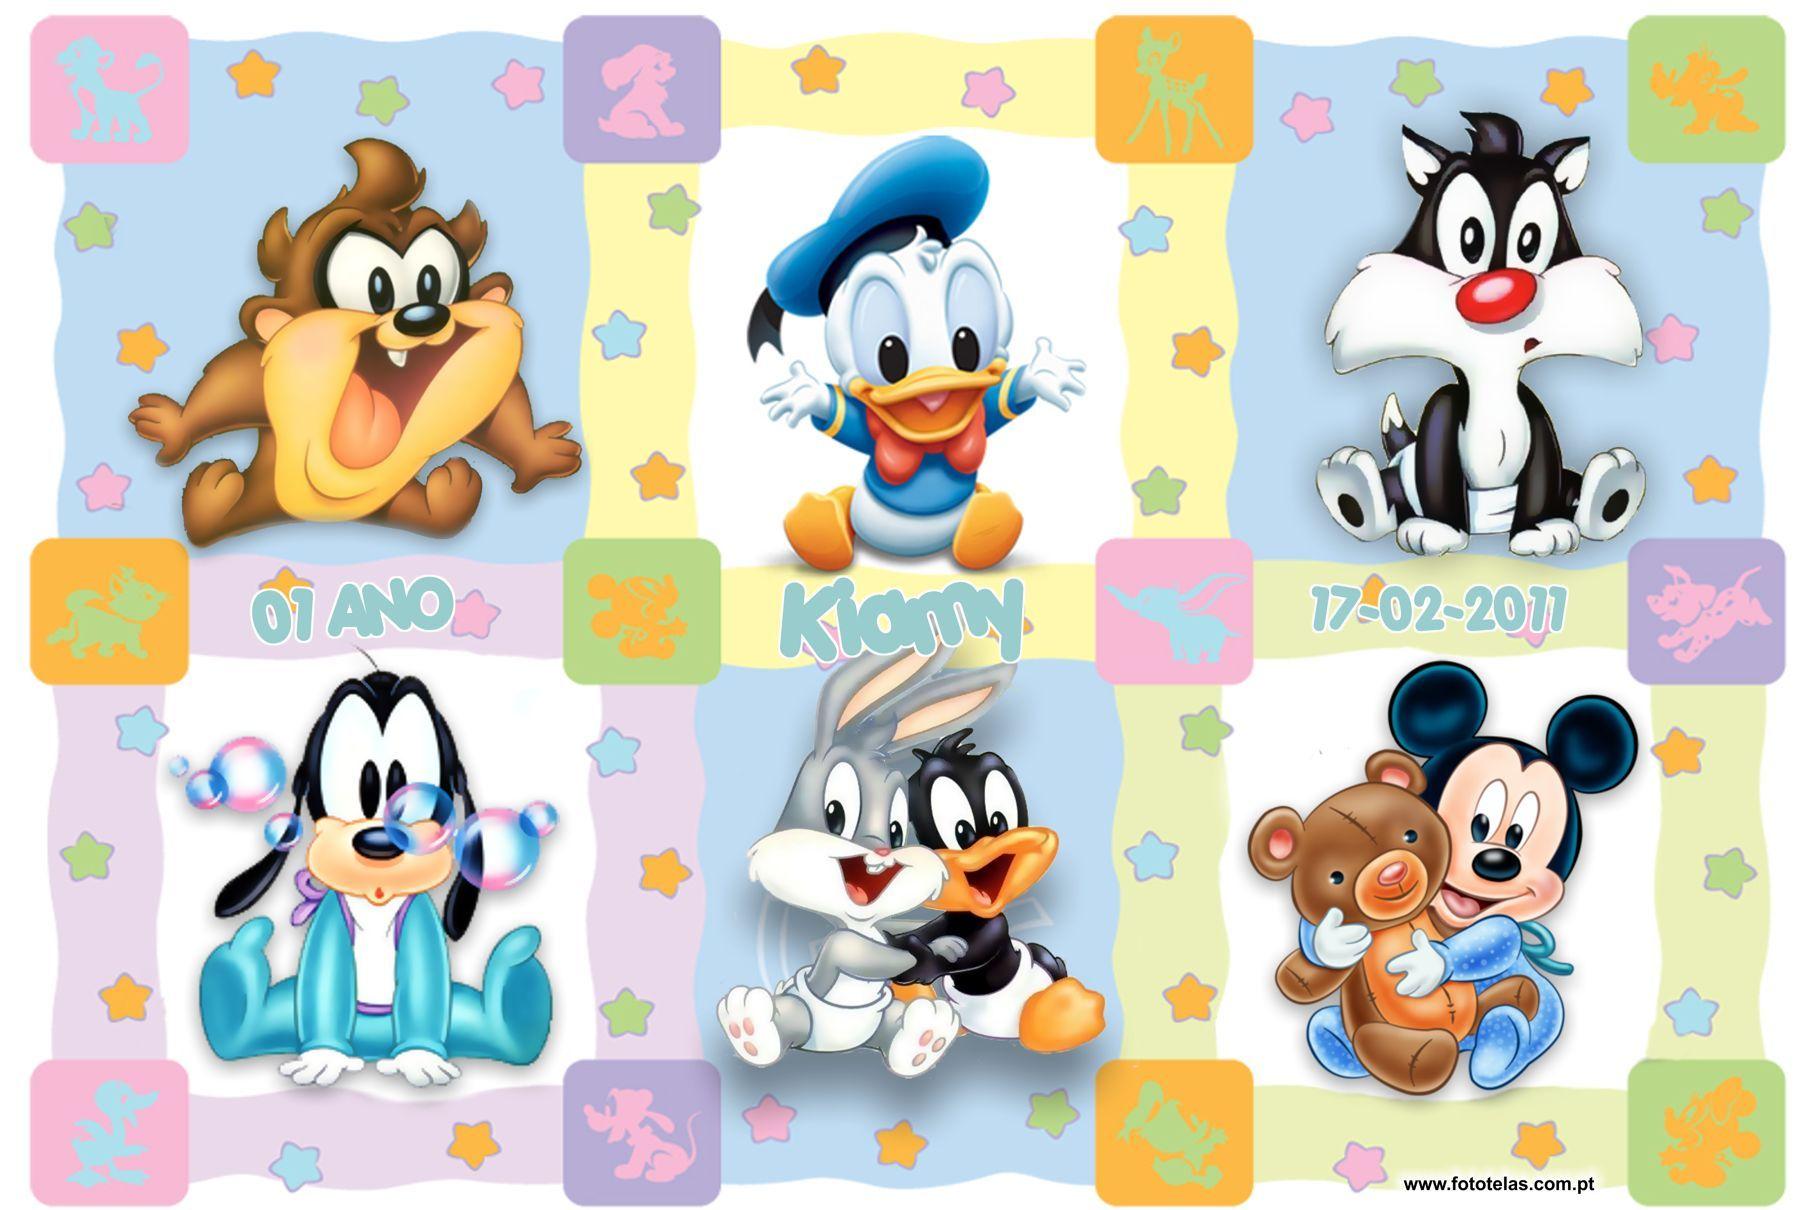 disney baby cartoon characters wallpapers